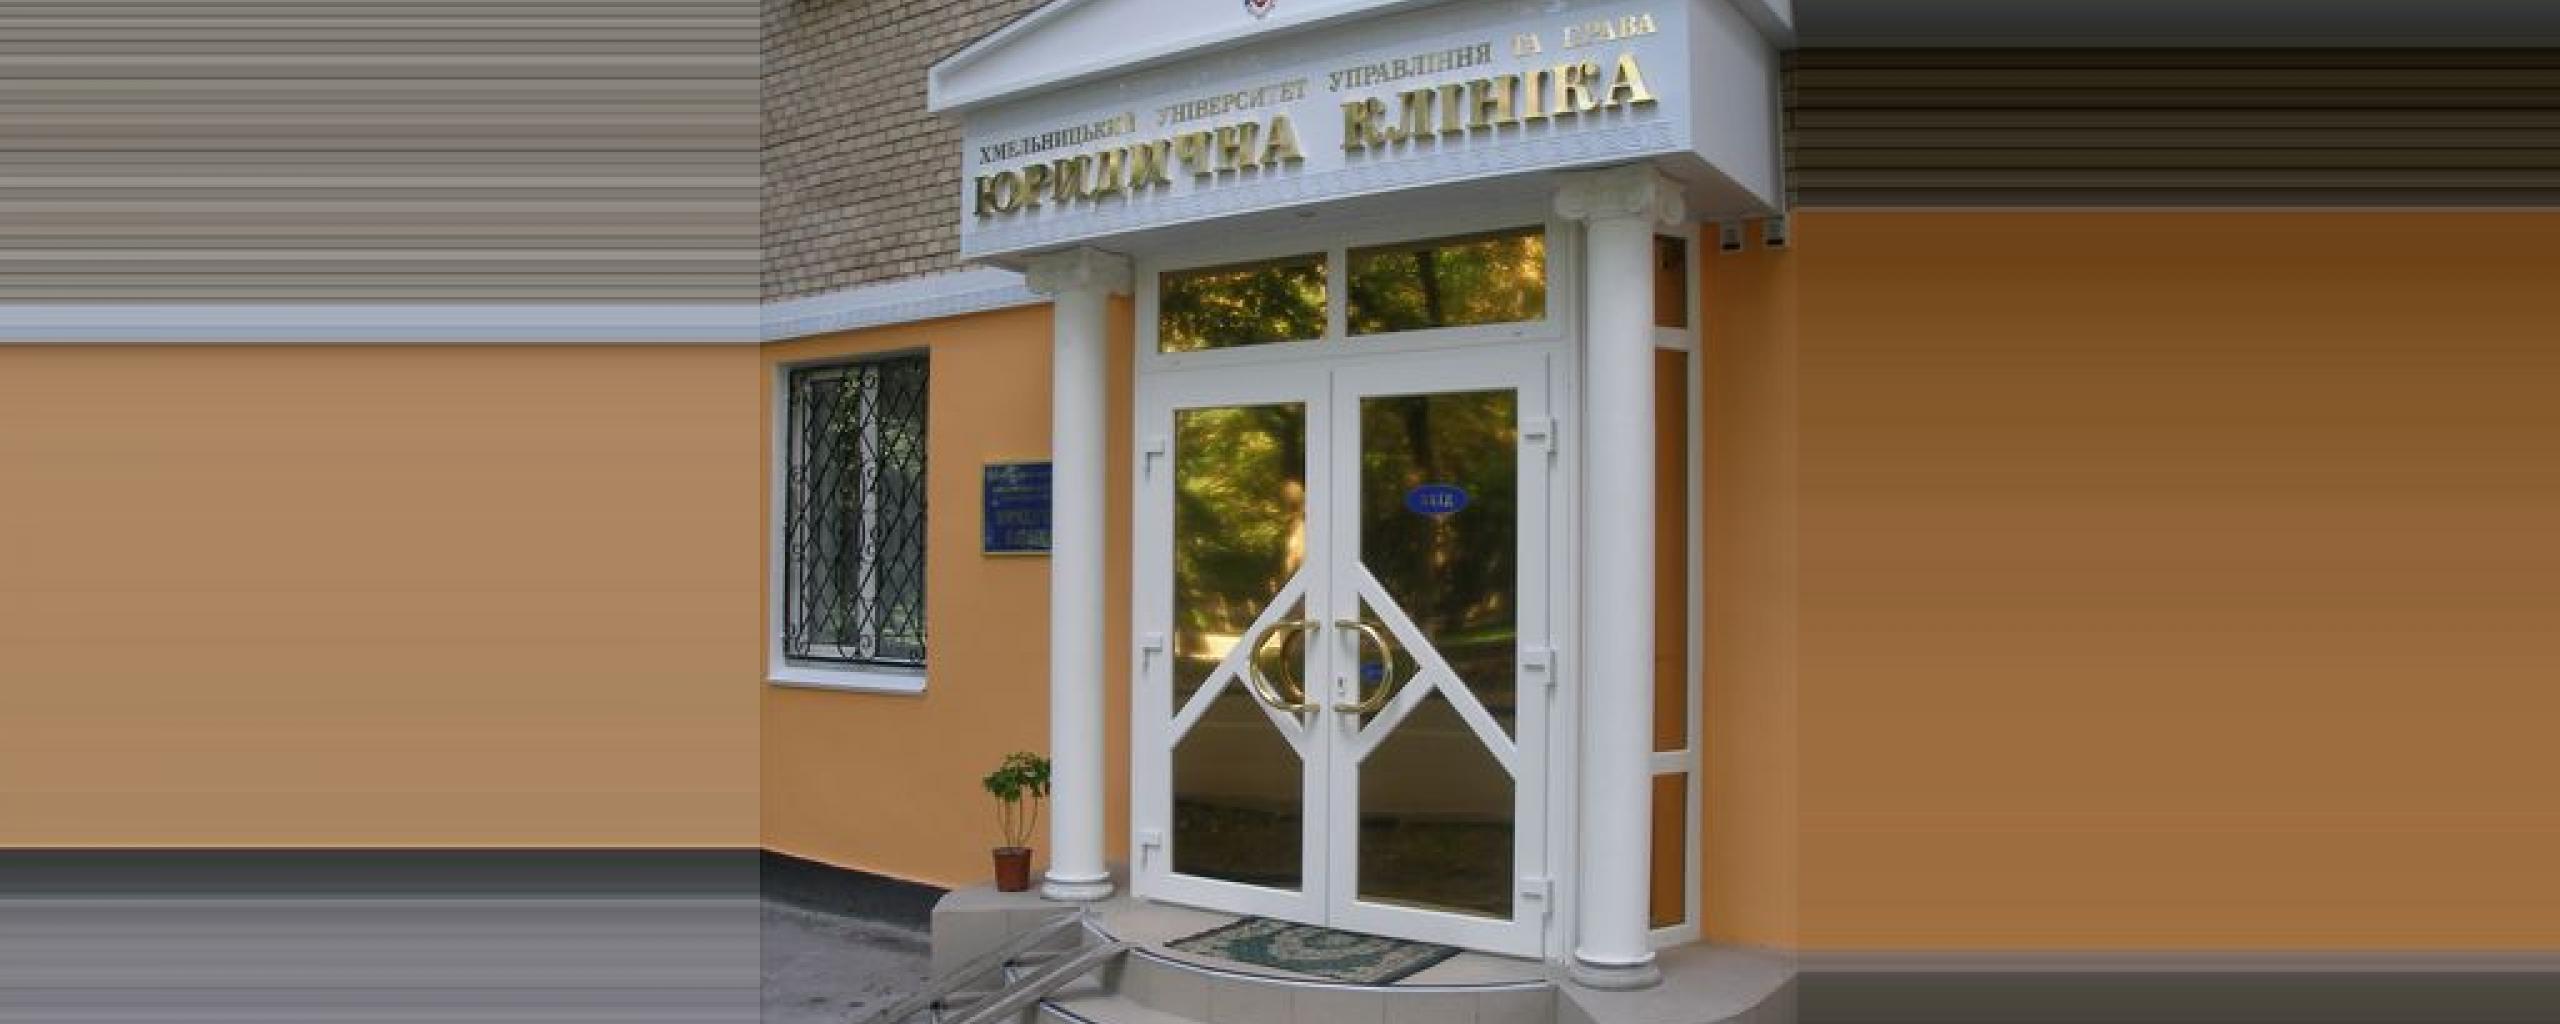 <a href="https://www.univer.km.ua/pro-universytet/inshi-pidrozdily/yurydychna-klinika/">Юридична клініка університету</a>